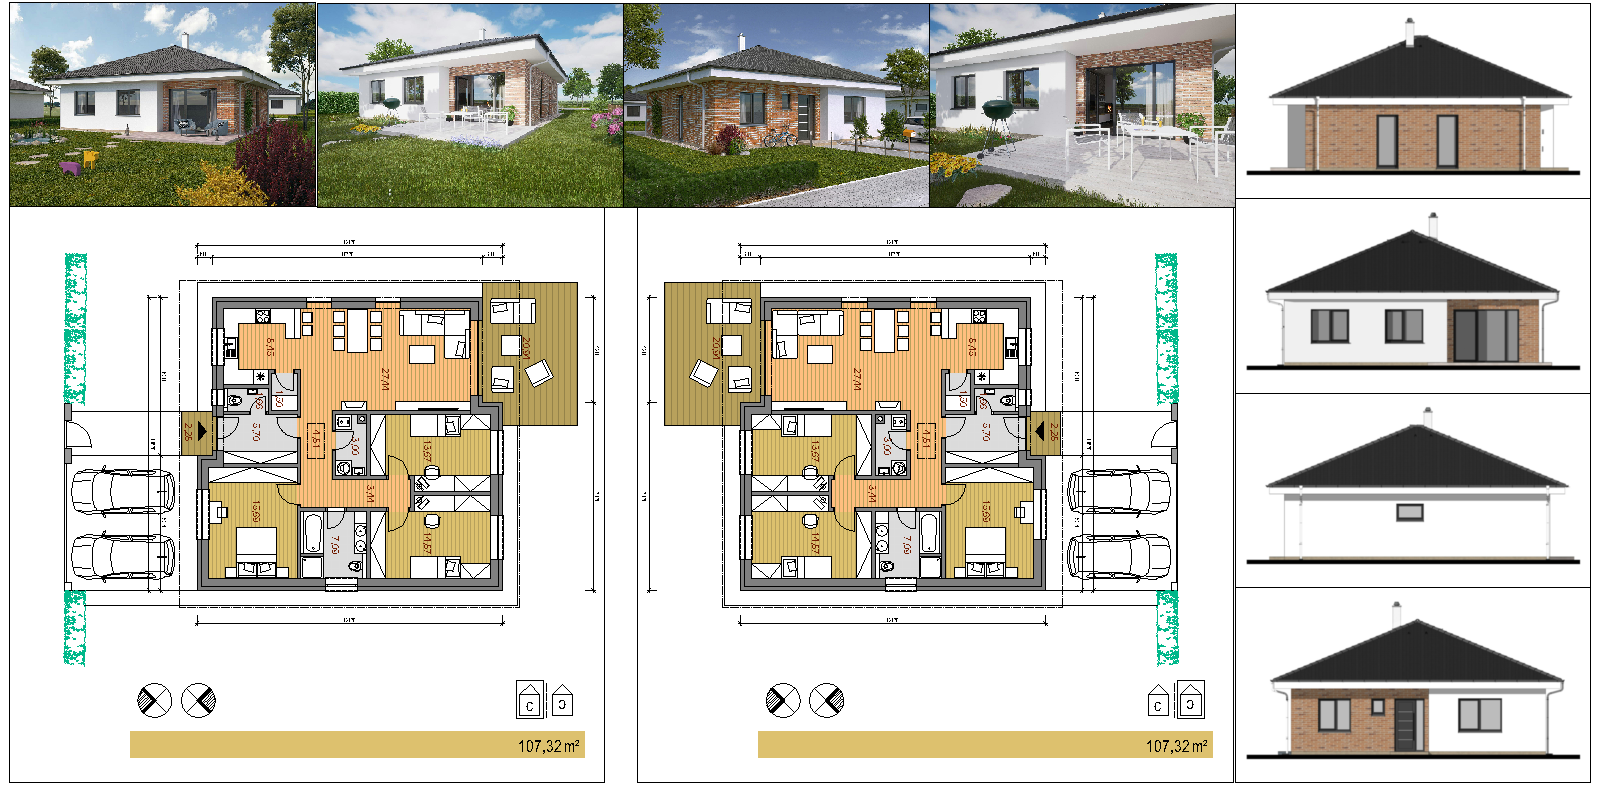 Family House Plan 107 sq m [DWG, PDF, JPG]